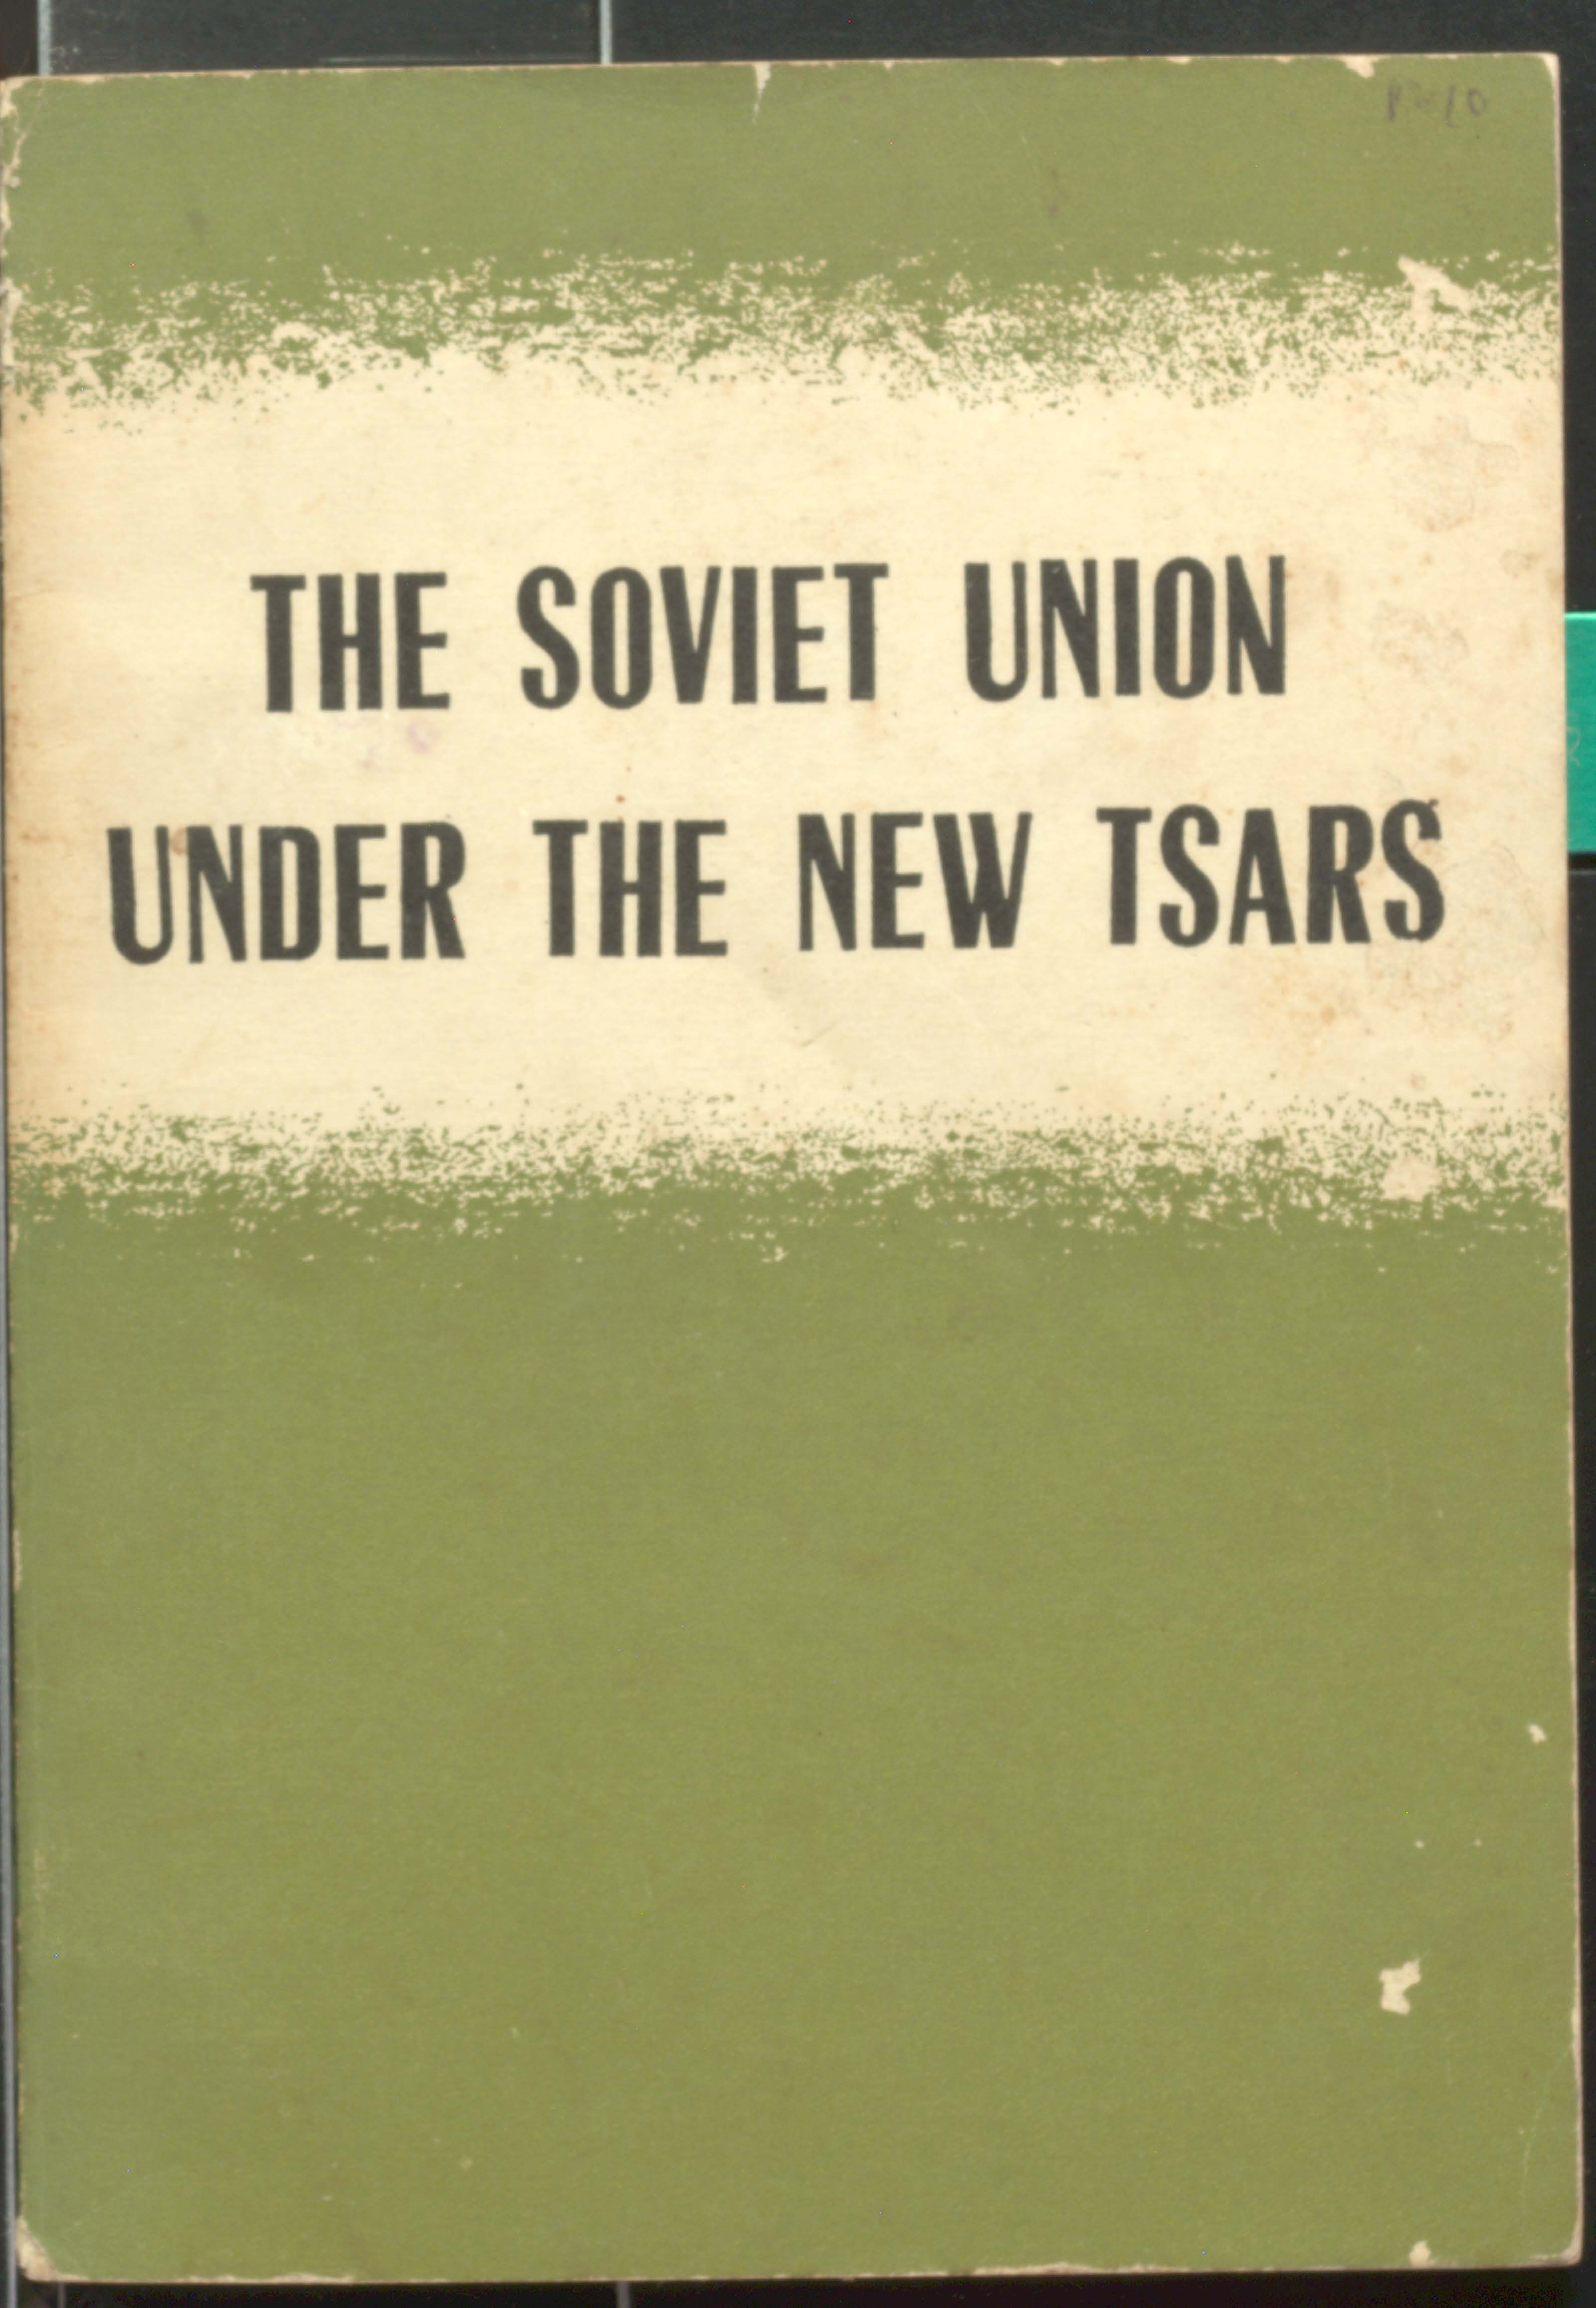 The Soviet union under the new tsars